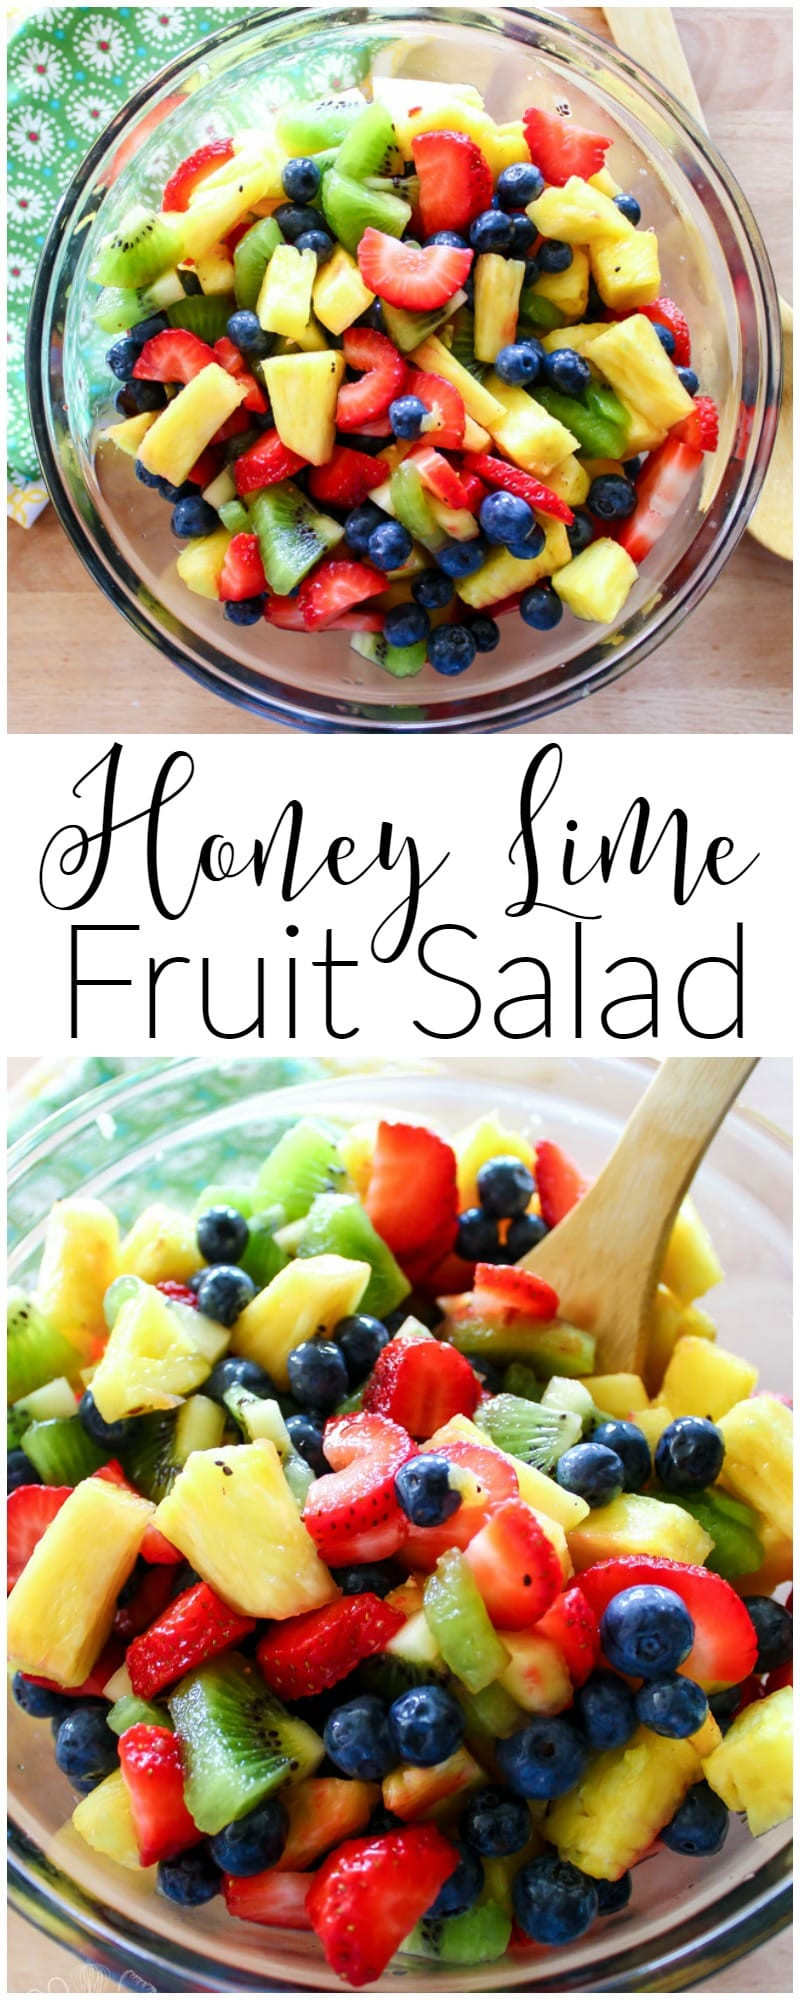 Summer Fruit Salad Ideas
 Honey Lime Fruit Salad